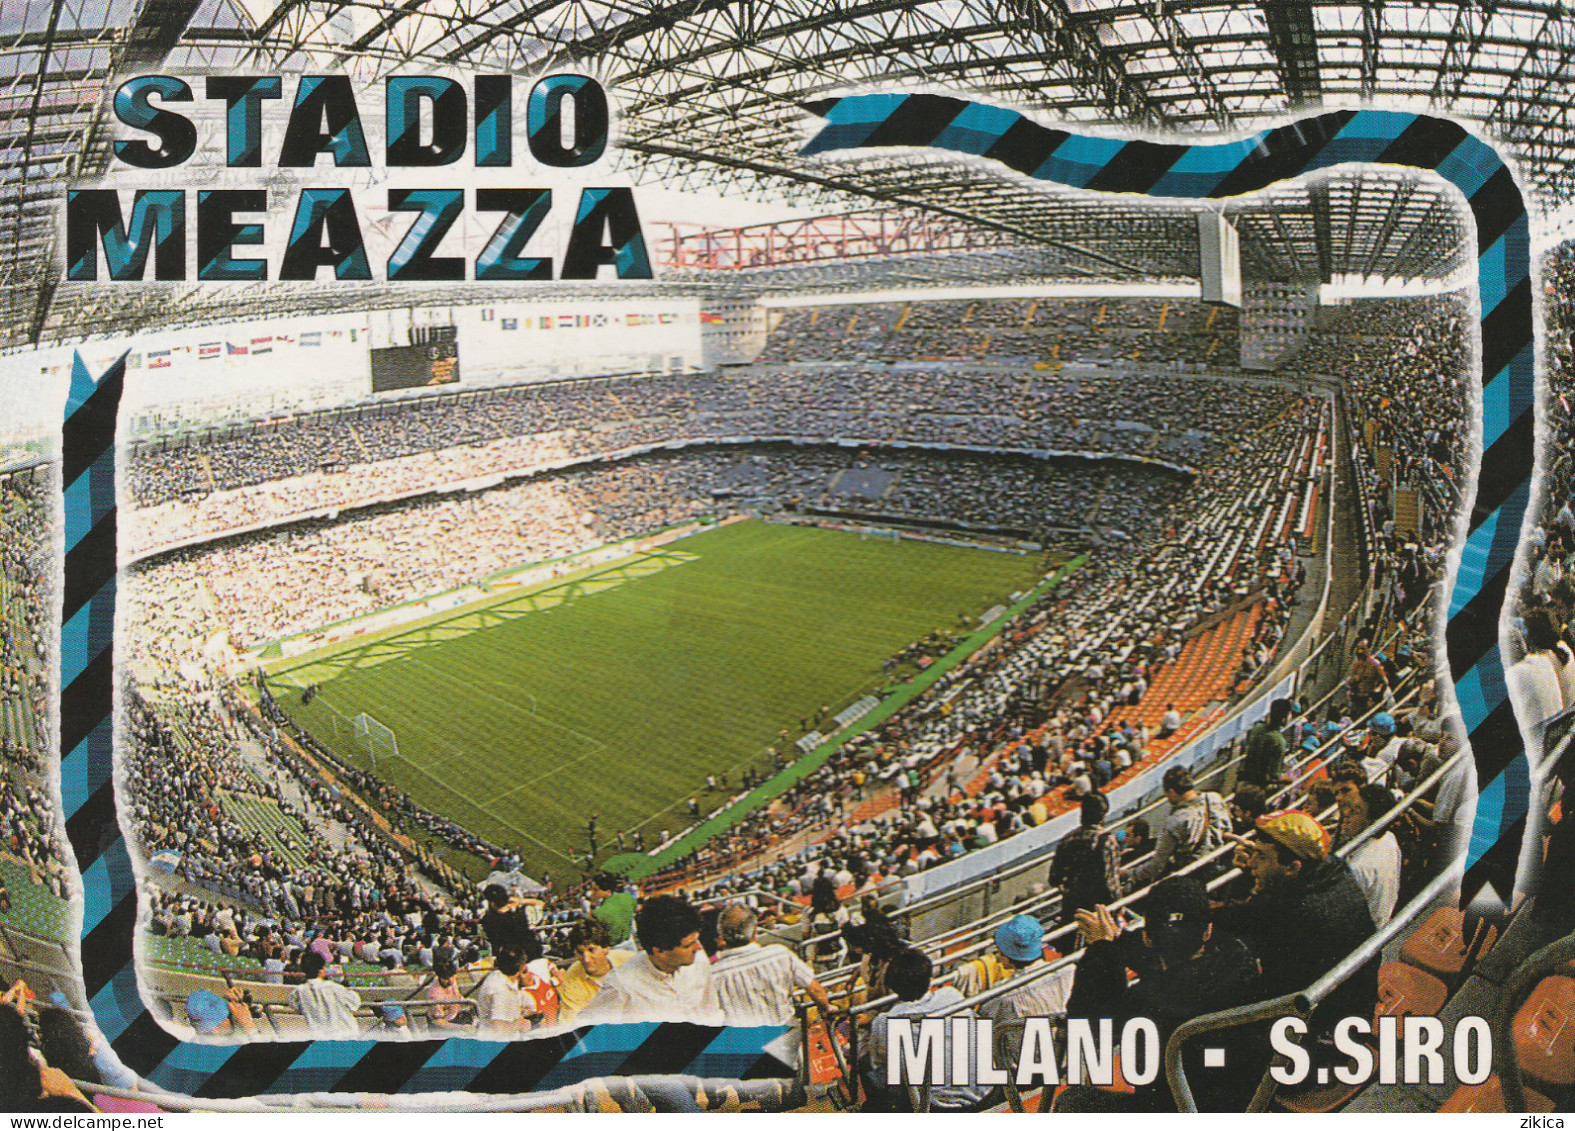 Stadion,Stadium,Le Stade,stade De Football,football Stadium : Meazza Milano,Italy,Italia,FC Internationale - Stadien